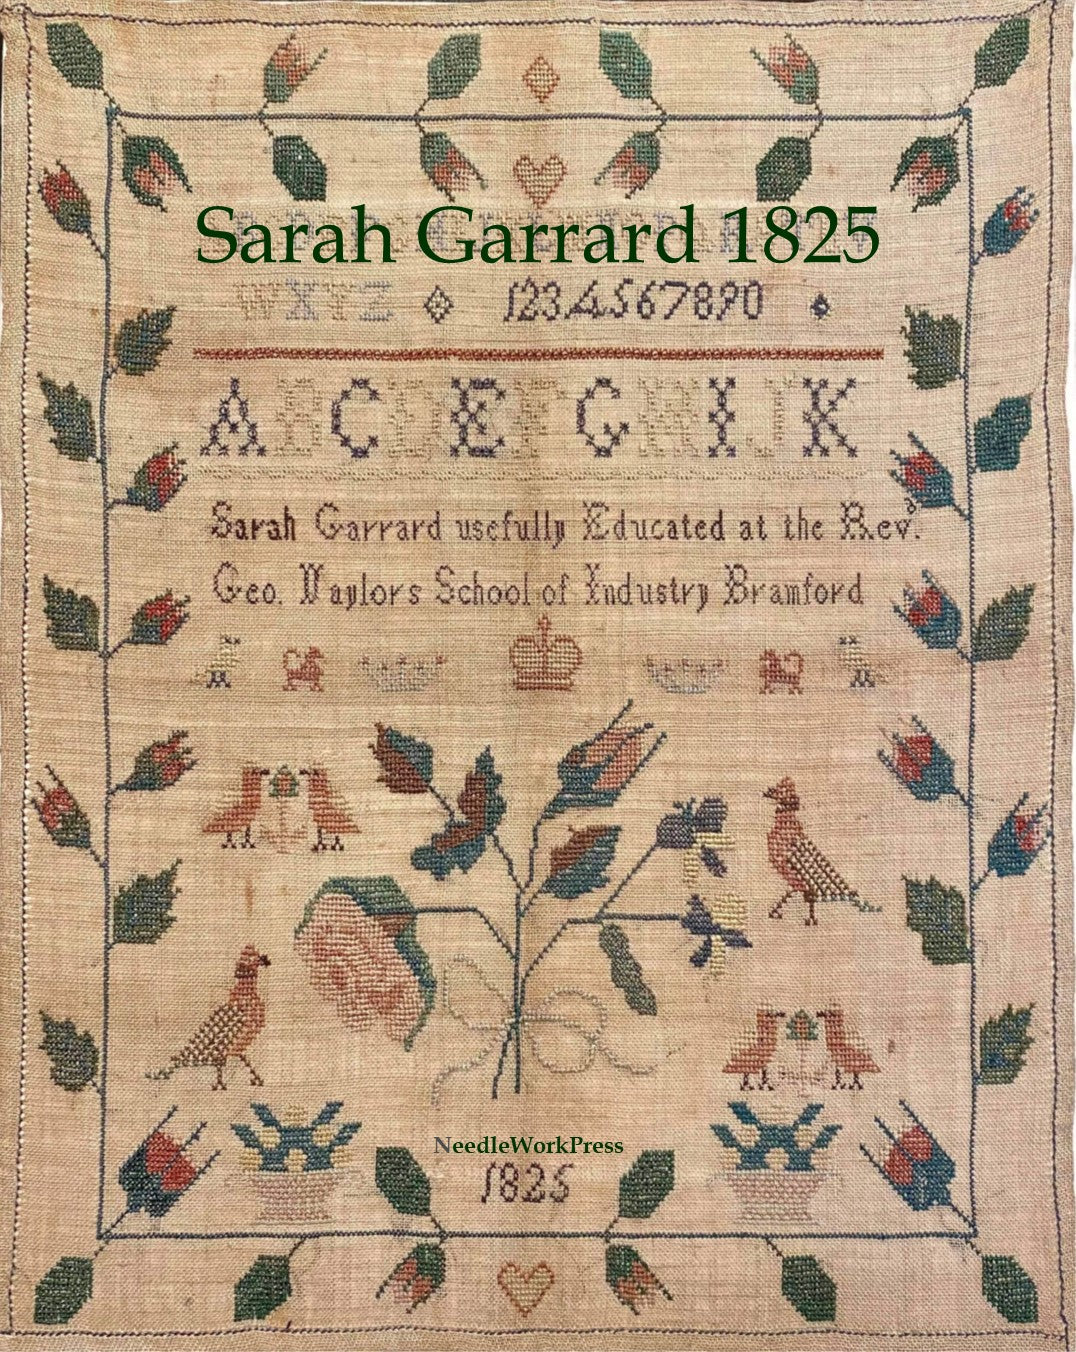 Sarah Garrard 1825 - Reproduction Sampler by Needlework Press